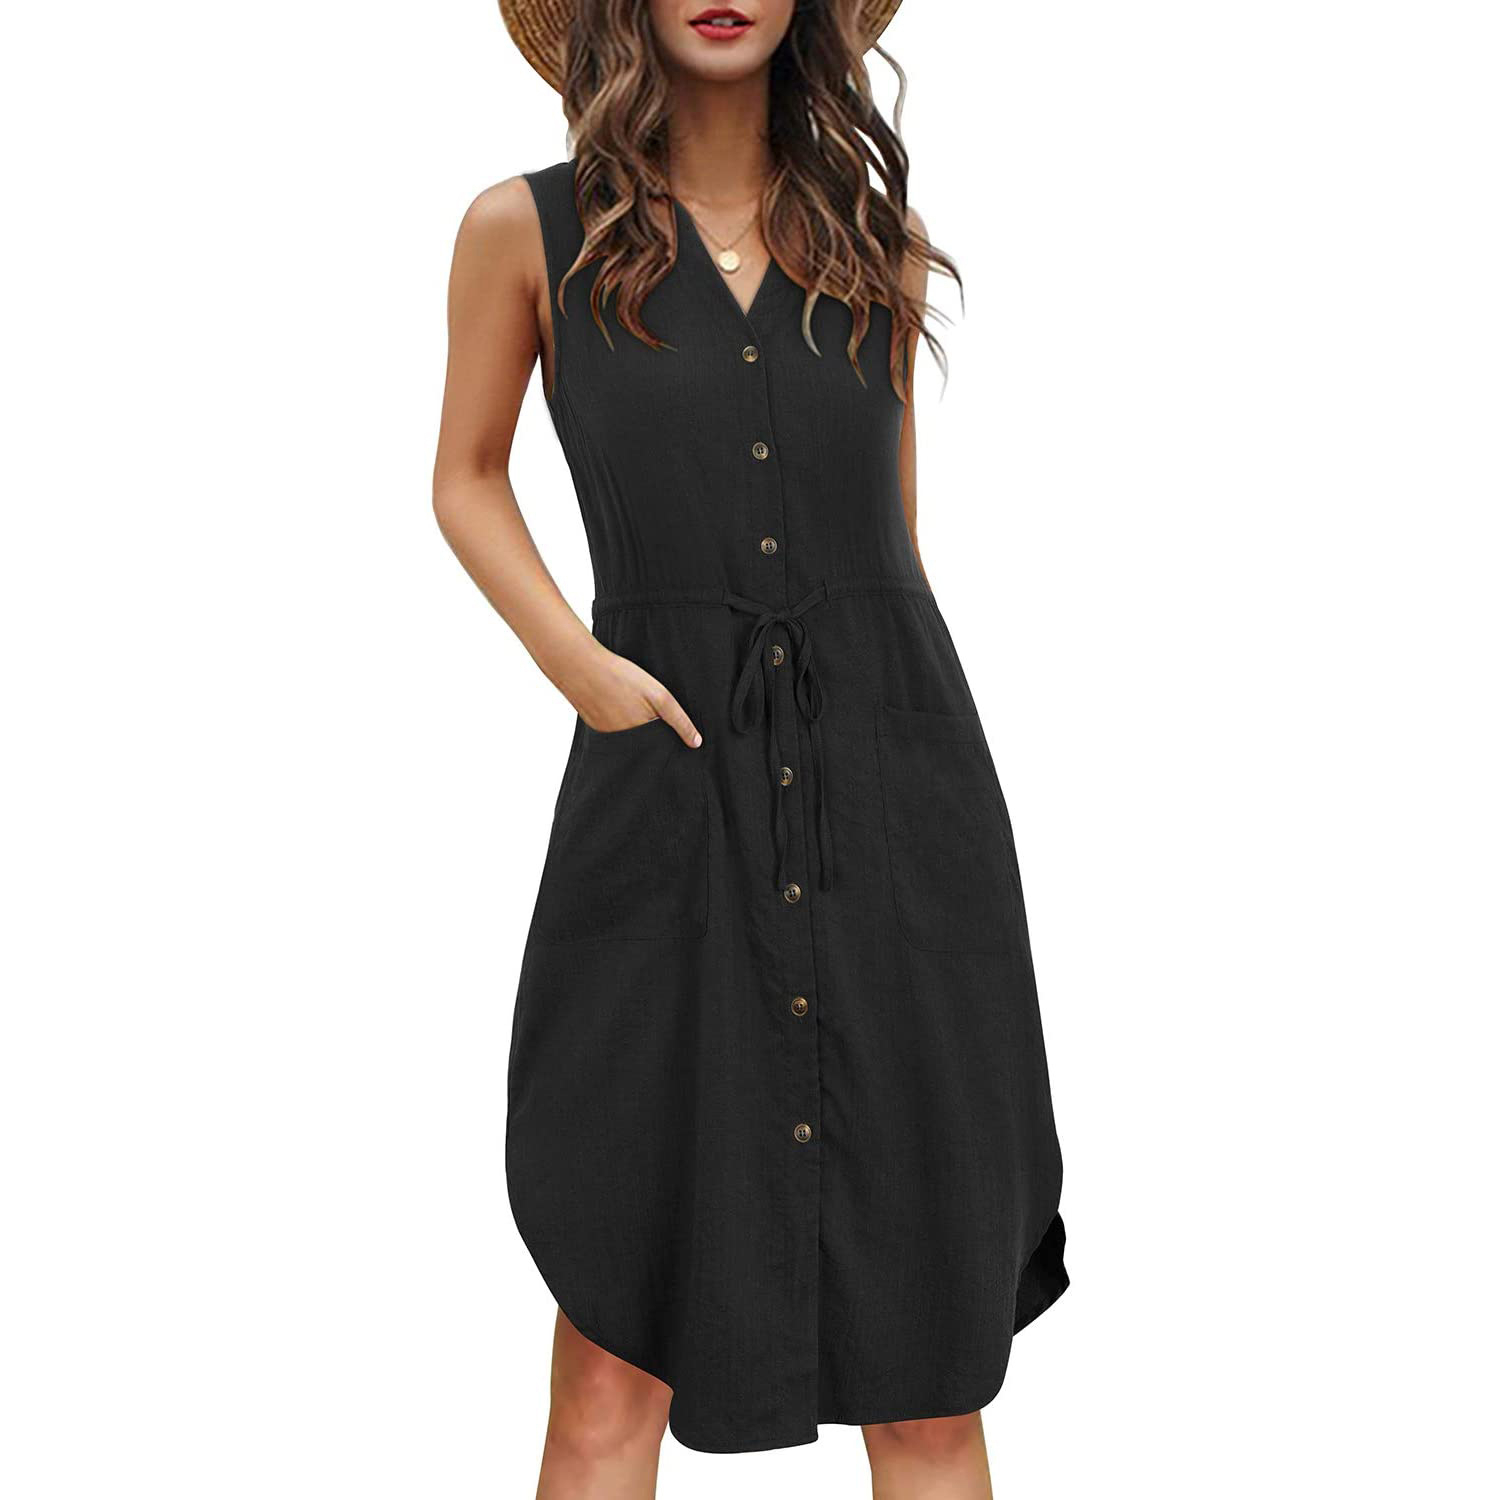 New Sling Button Pocket Dress - Black, M